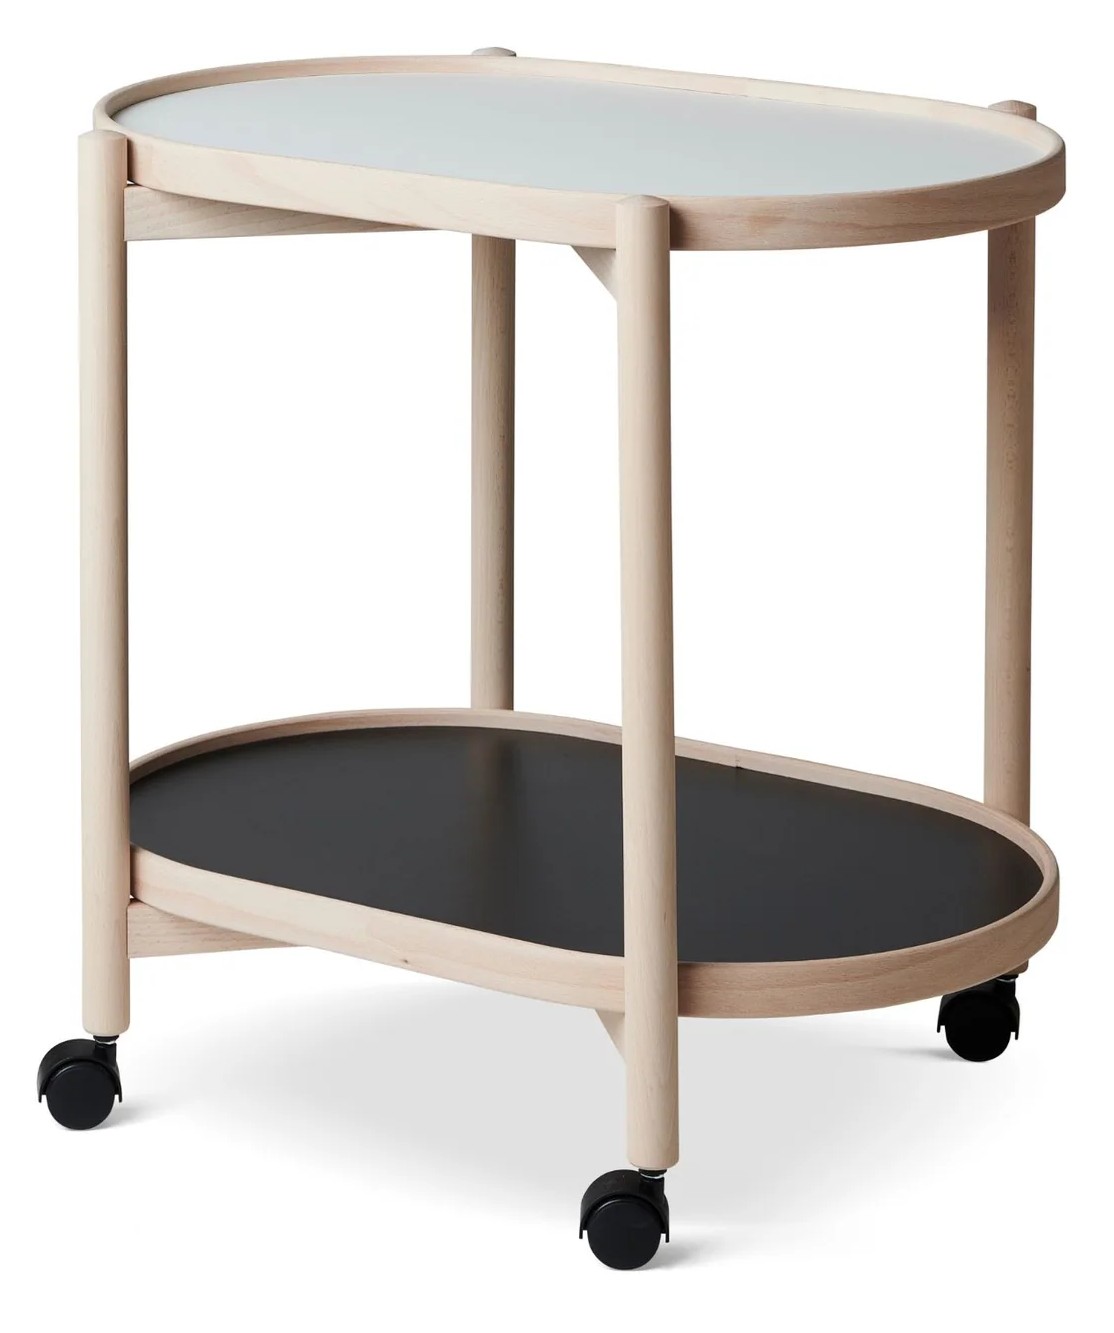 Thomsen Furniture - James Rullebord Ubehandlet eg - Melamin 60x40 cm med Hjul